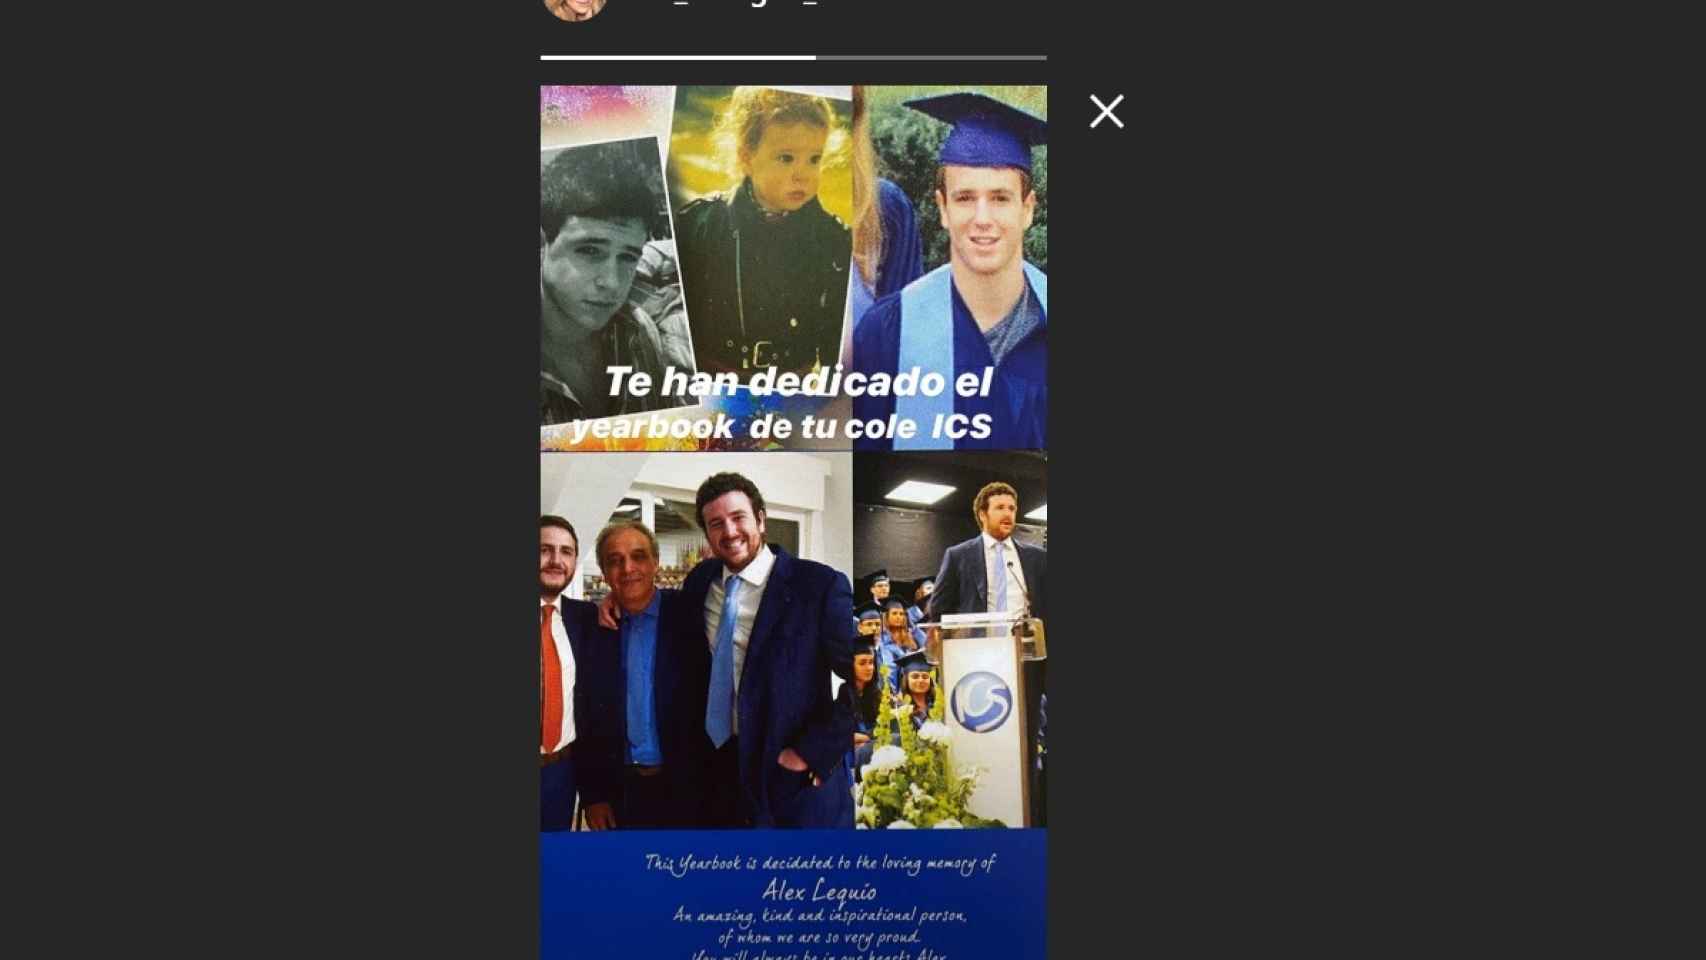 Historia de Instagram de Ana Obregón.